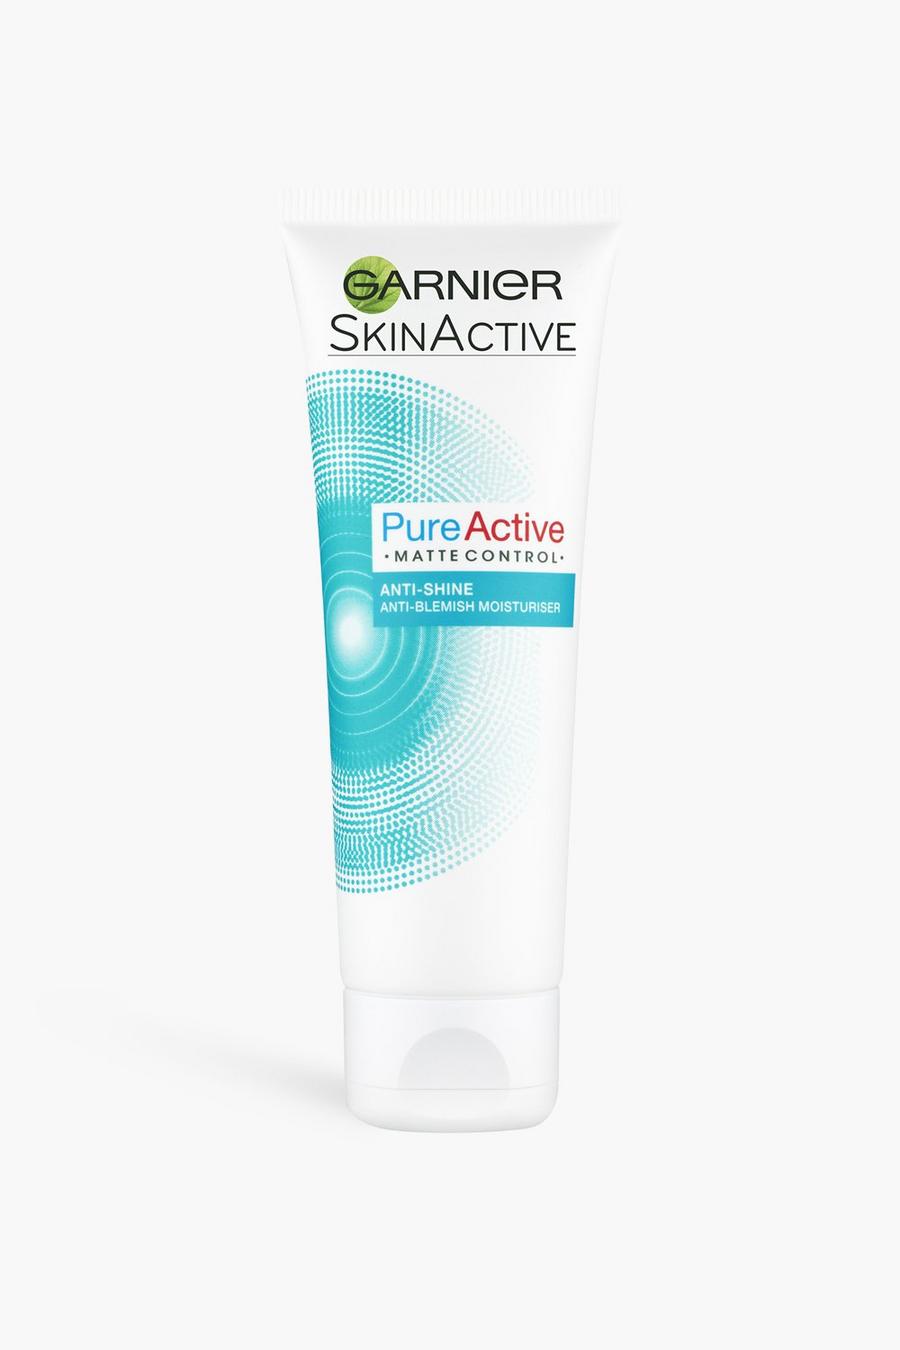 White Garnier Pure Active Matte Control Anti-Blemish Face Moisturiser 50ml image number 1